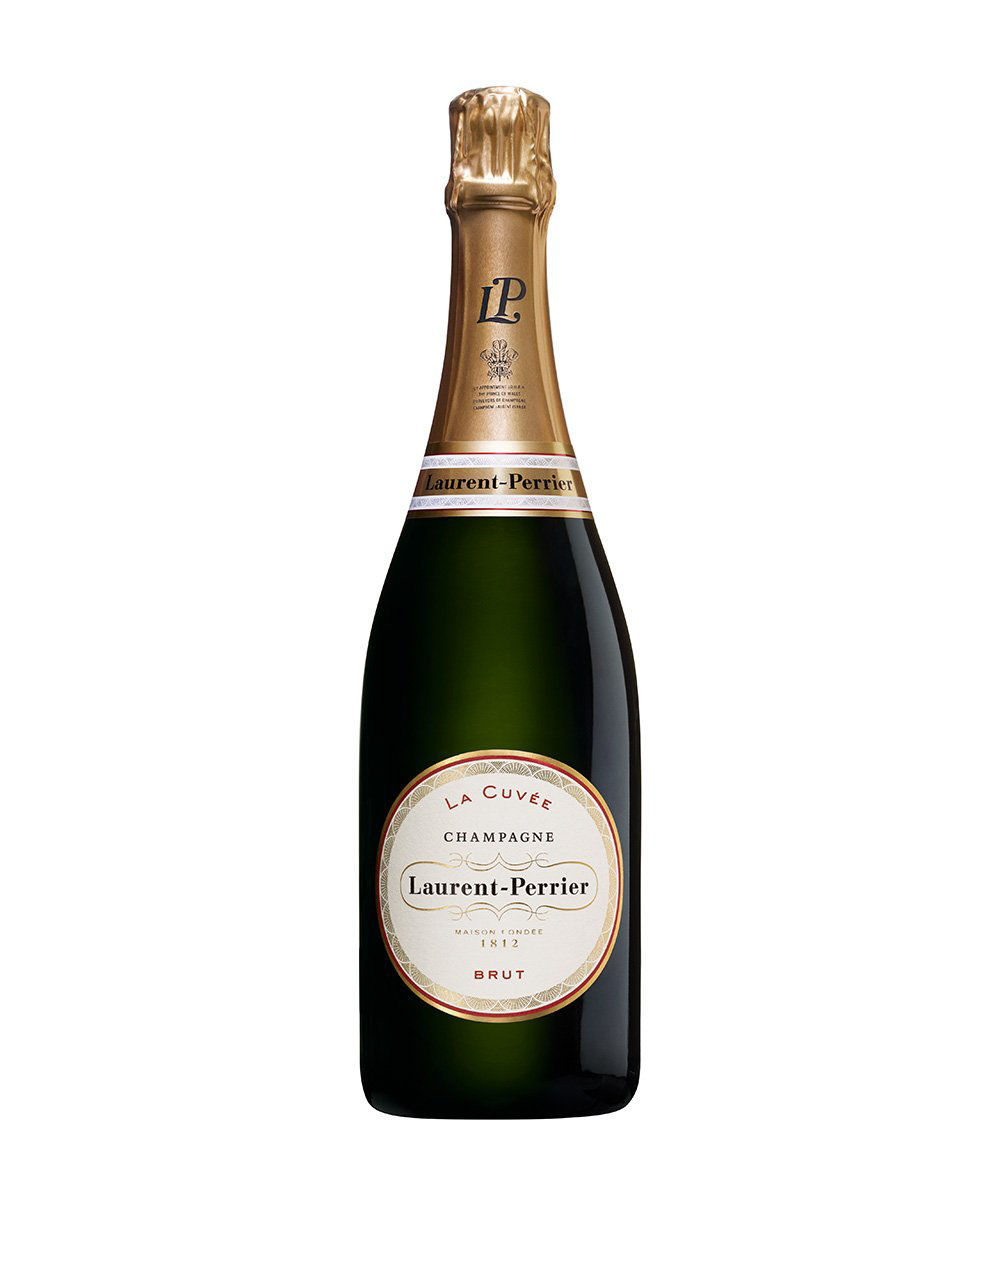 Laurent Perrier La Cuvee champagne 375ml